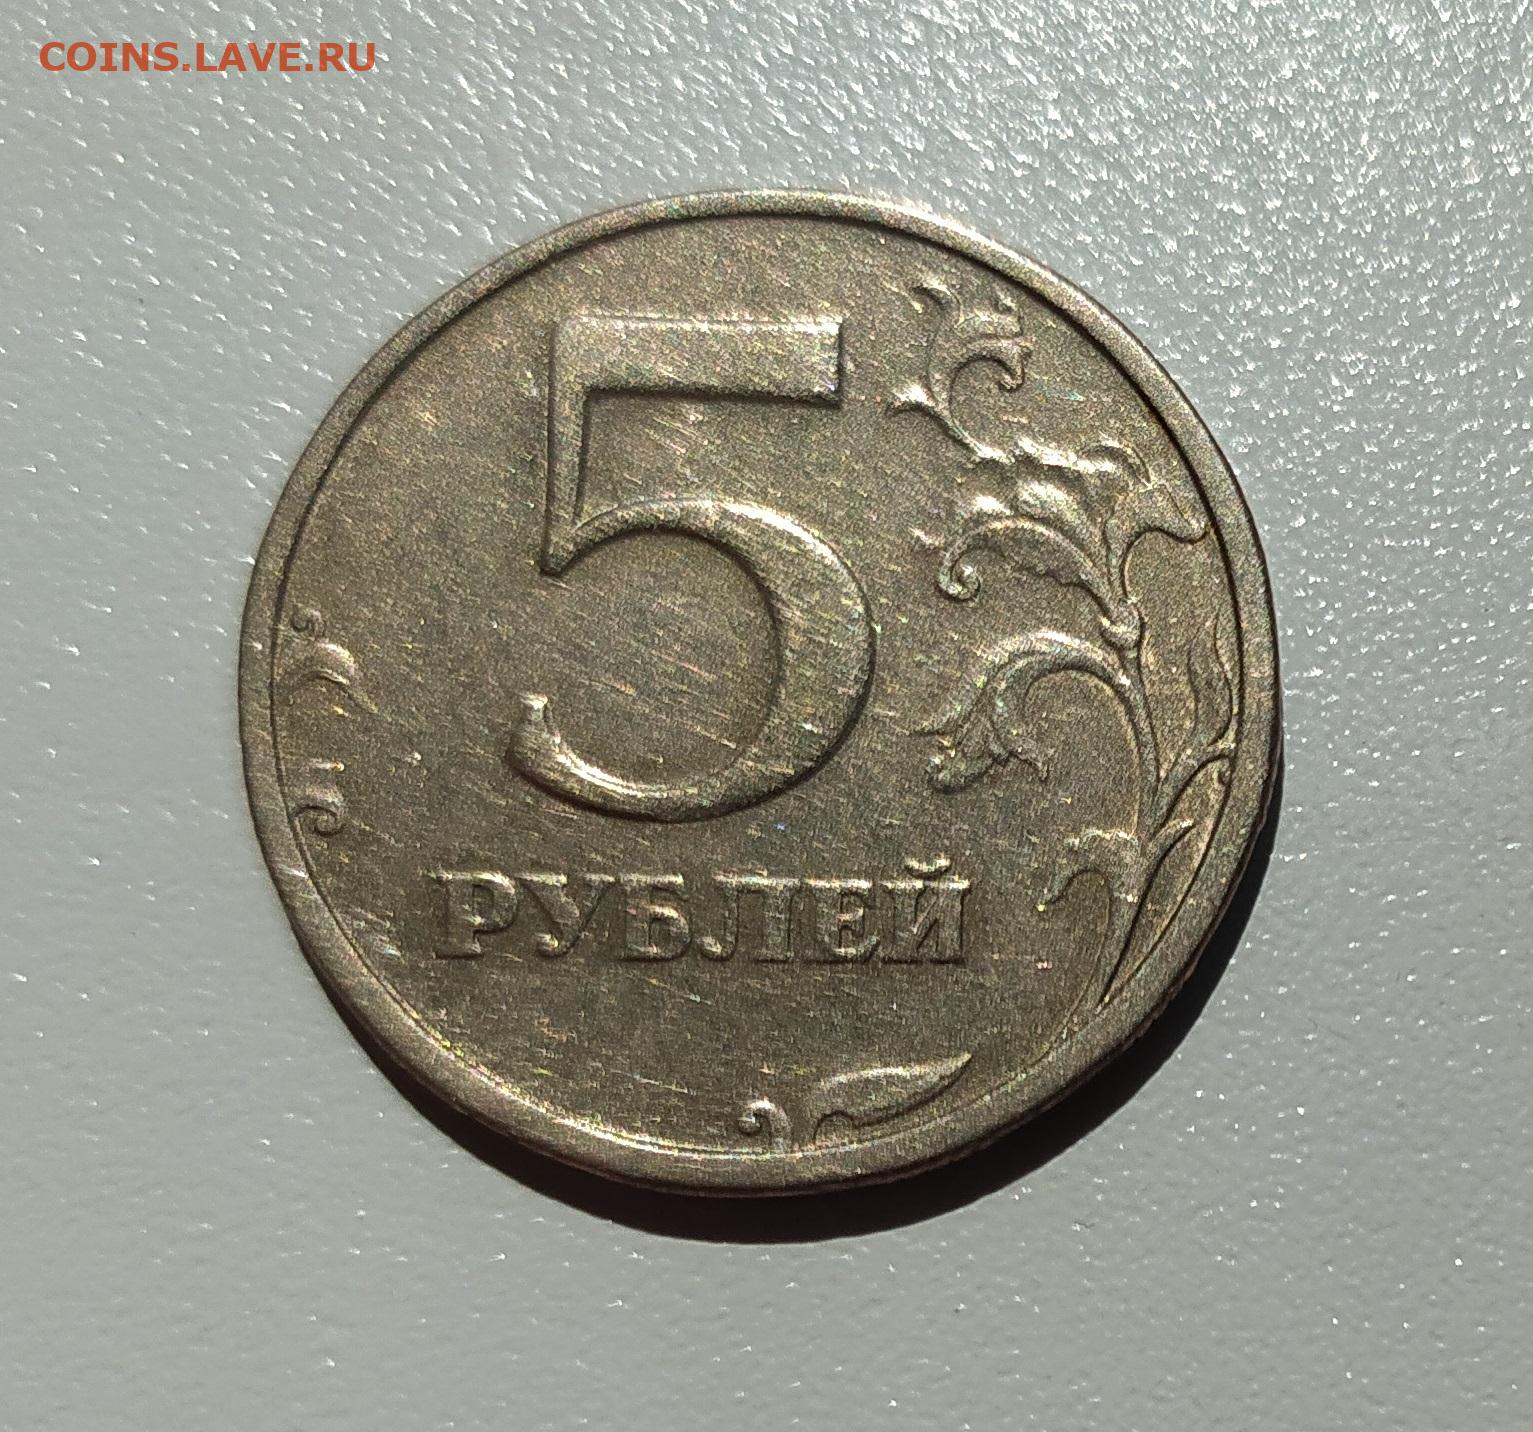 5 рублей заказать. Двадцать пять рублей. Двадцать пять рублей латунь 2014. Купить рубль на аукционе 2003 года.